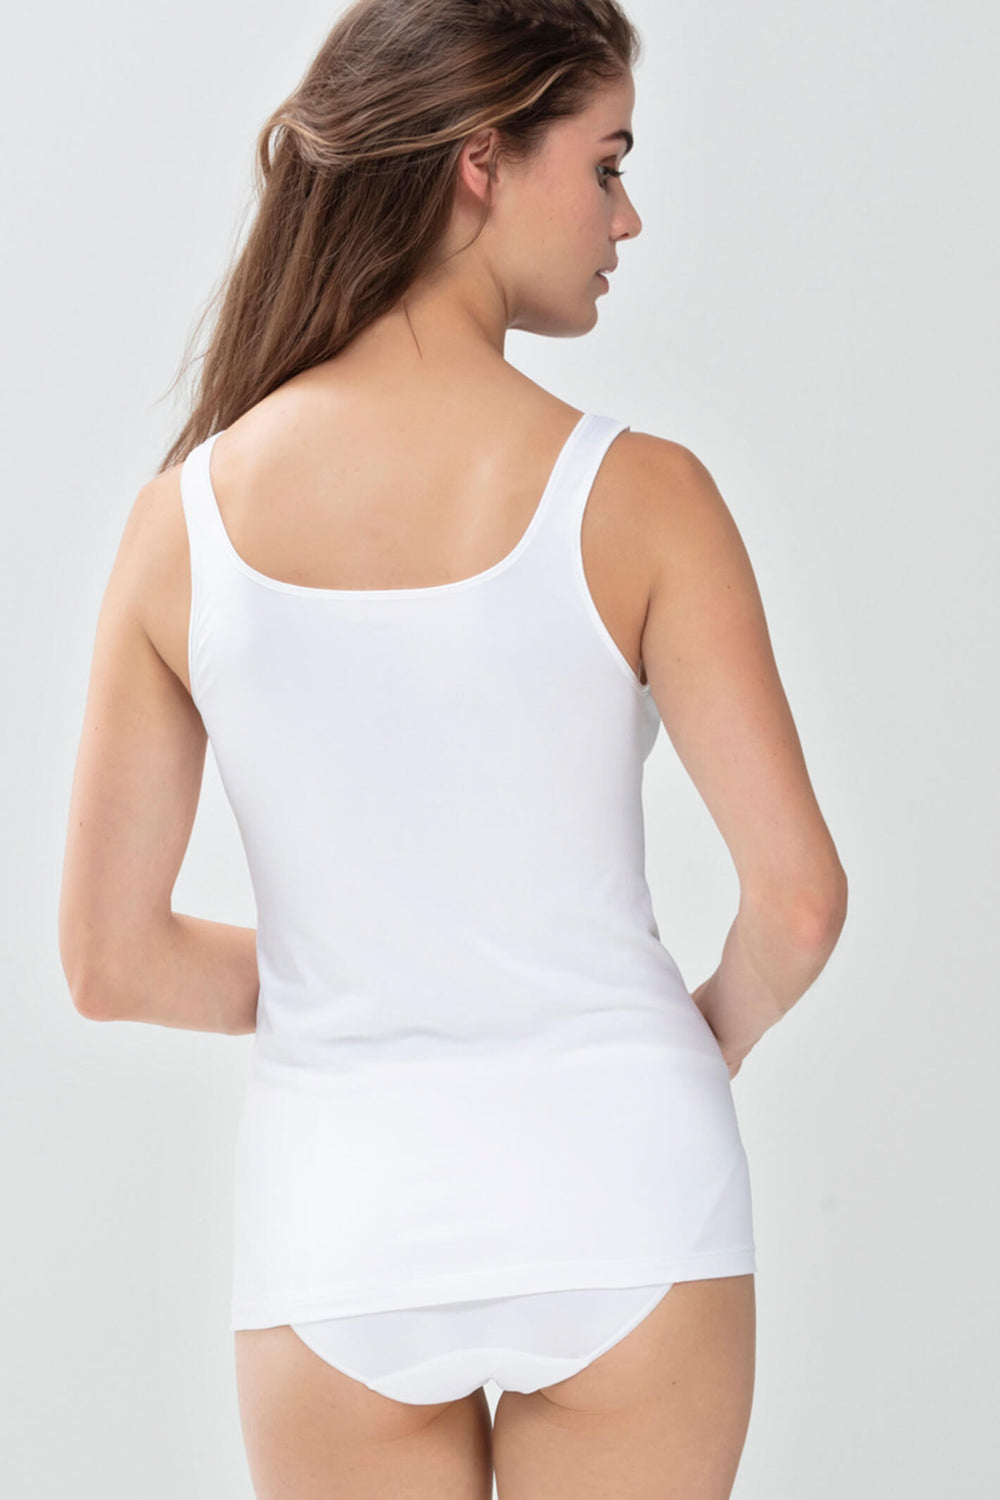 Mey 55204 White Vest Top - Olivia Grace Fashion